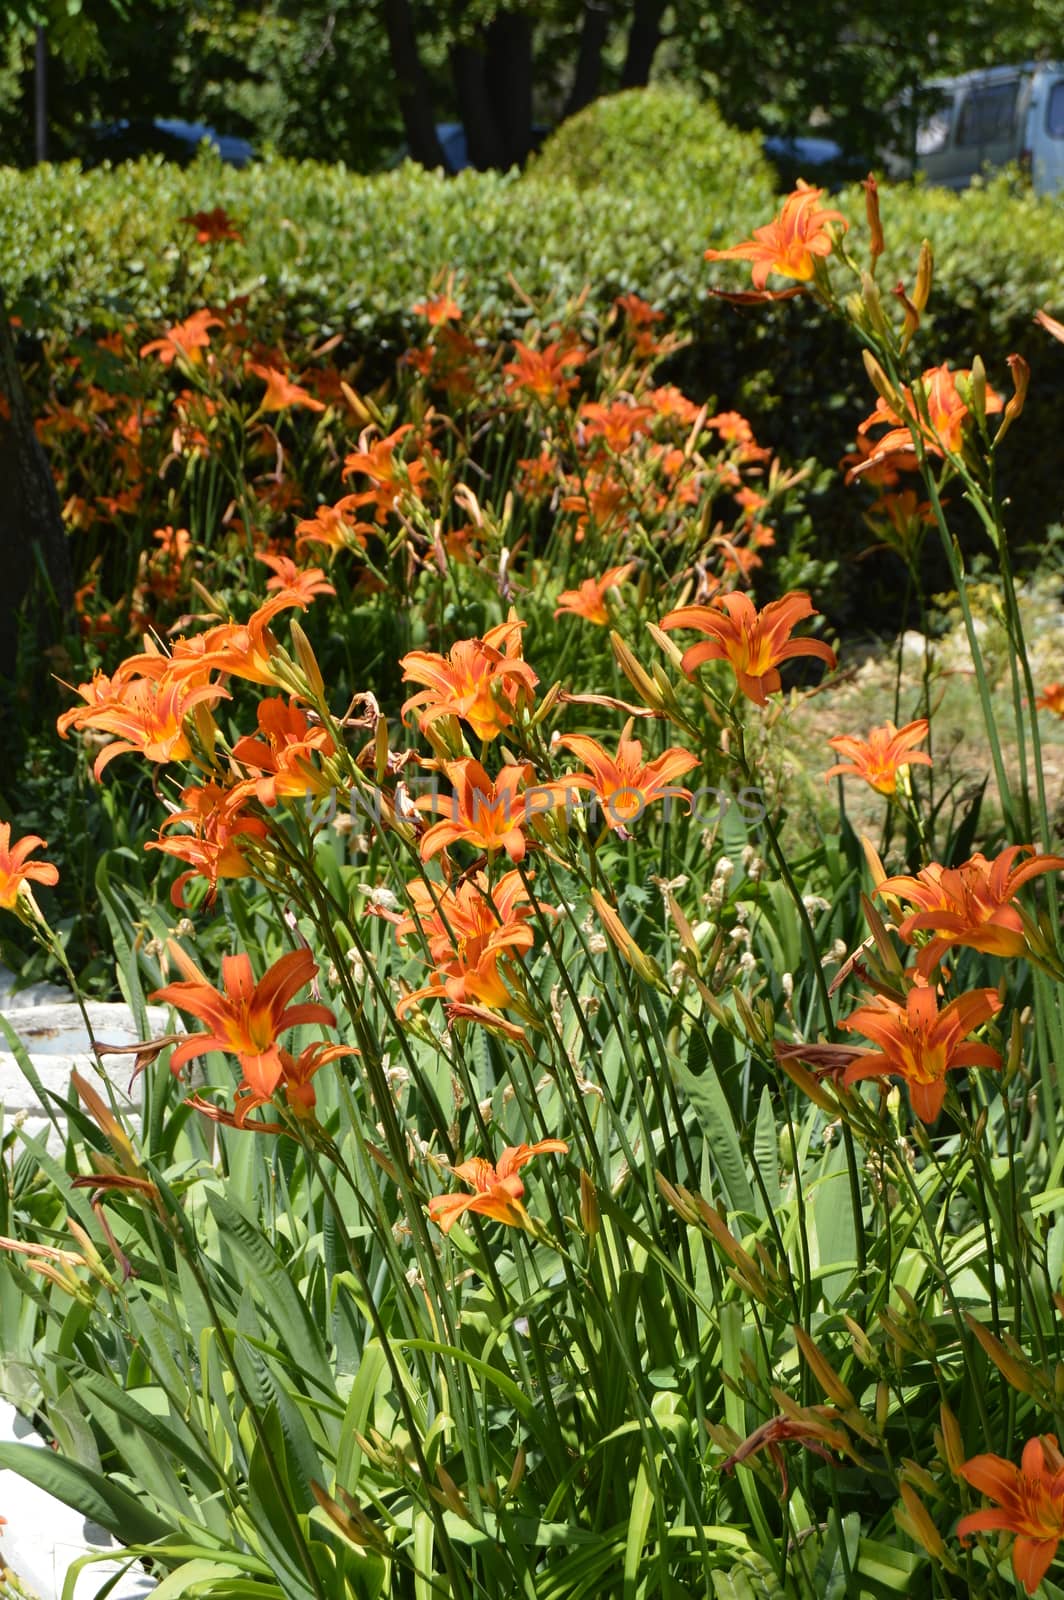 Orange flower daylily, SHRUB GROWING IN the FLOWERBED IN the GARDEN.